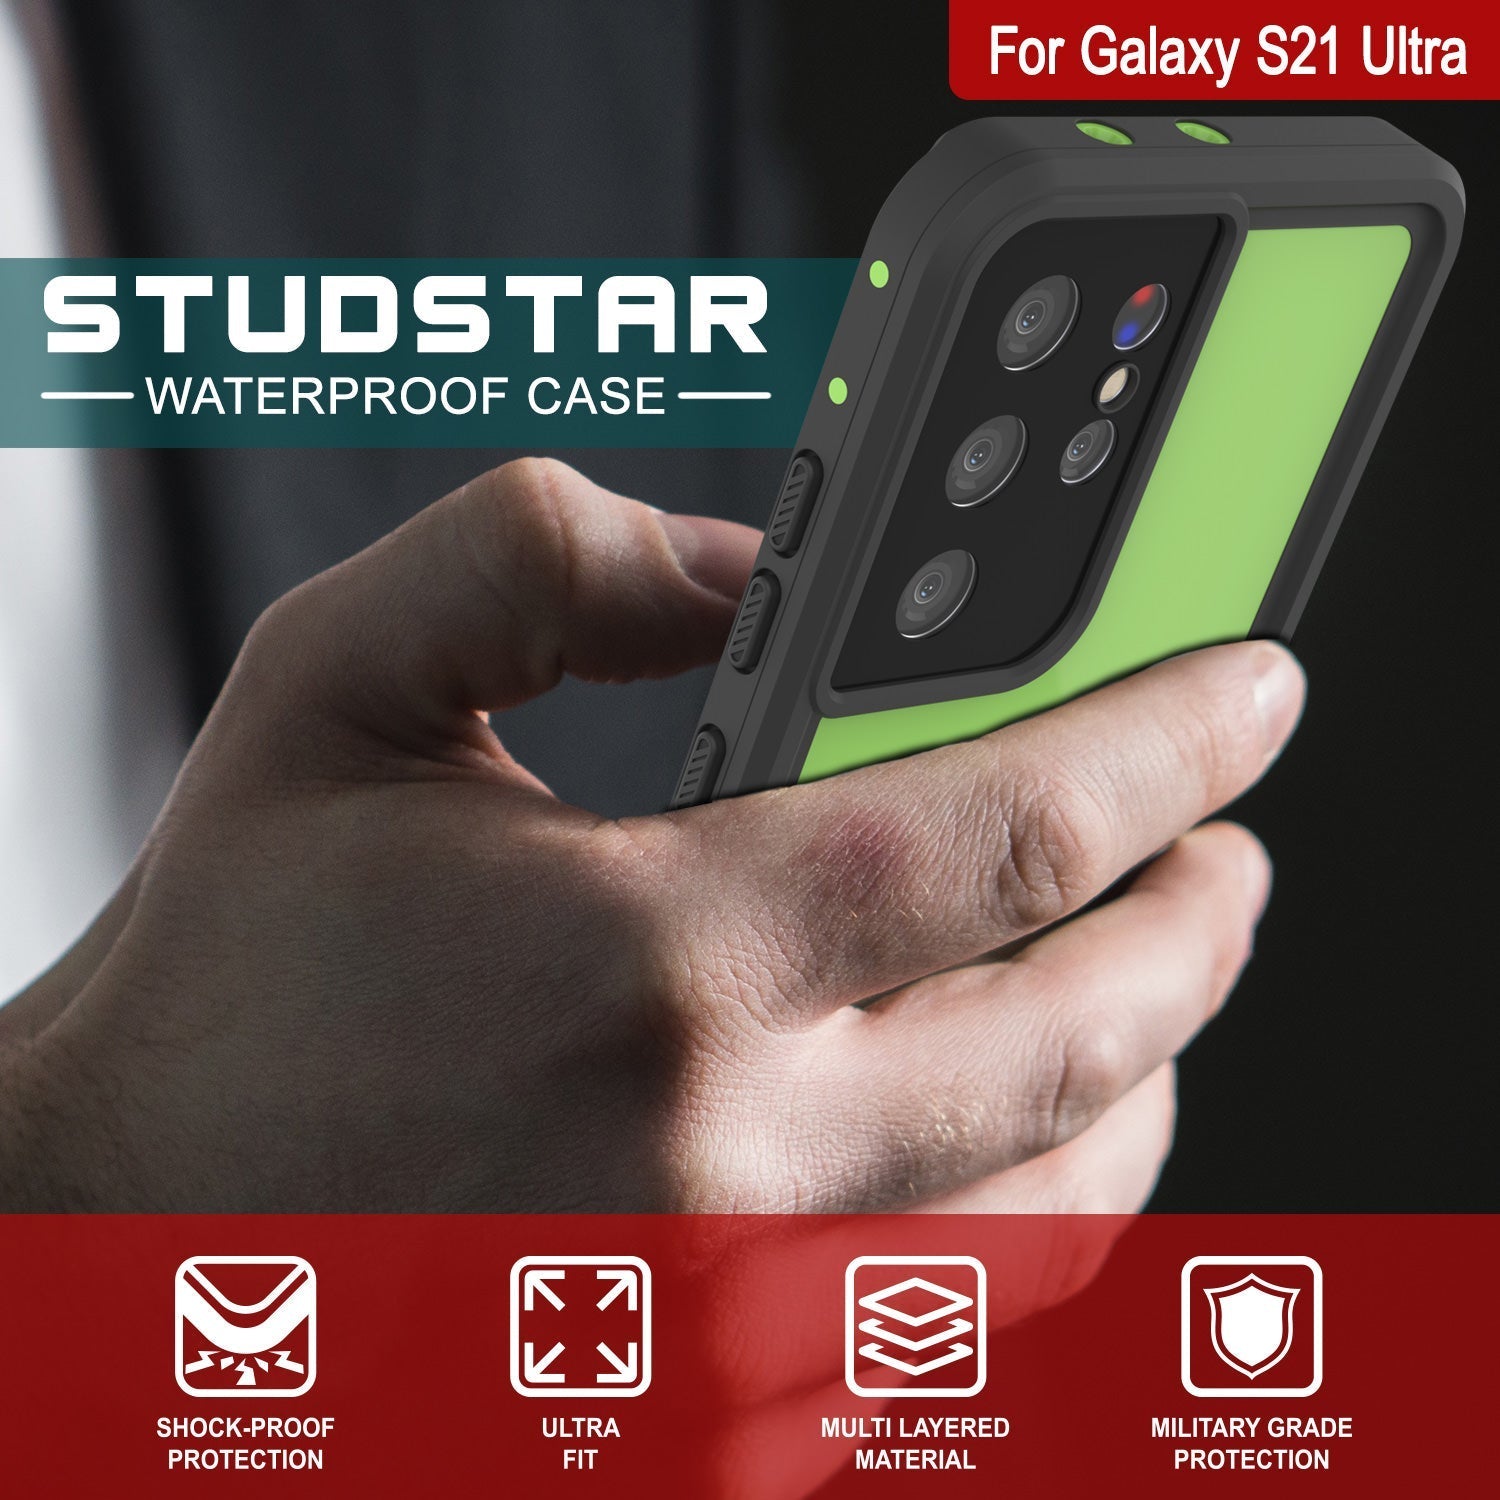 Galaxy S22 Ultra Waterproof Case PunkCase StudStar Light Green Thin 6.6ft Underwater IP68 ShockProof